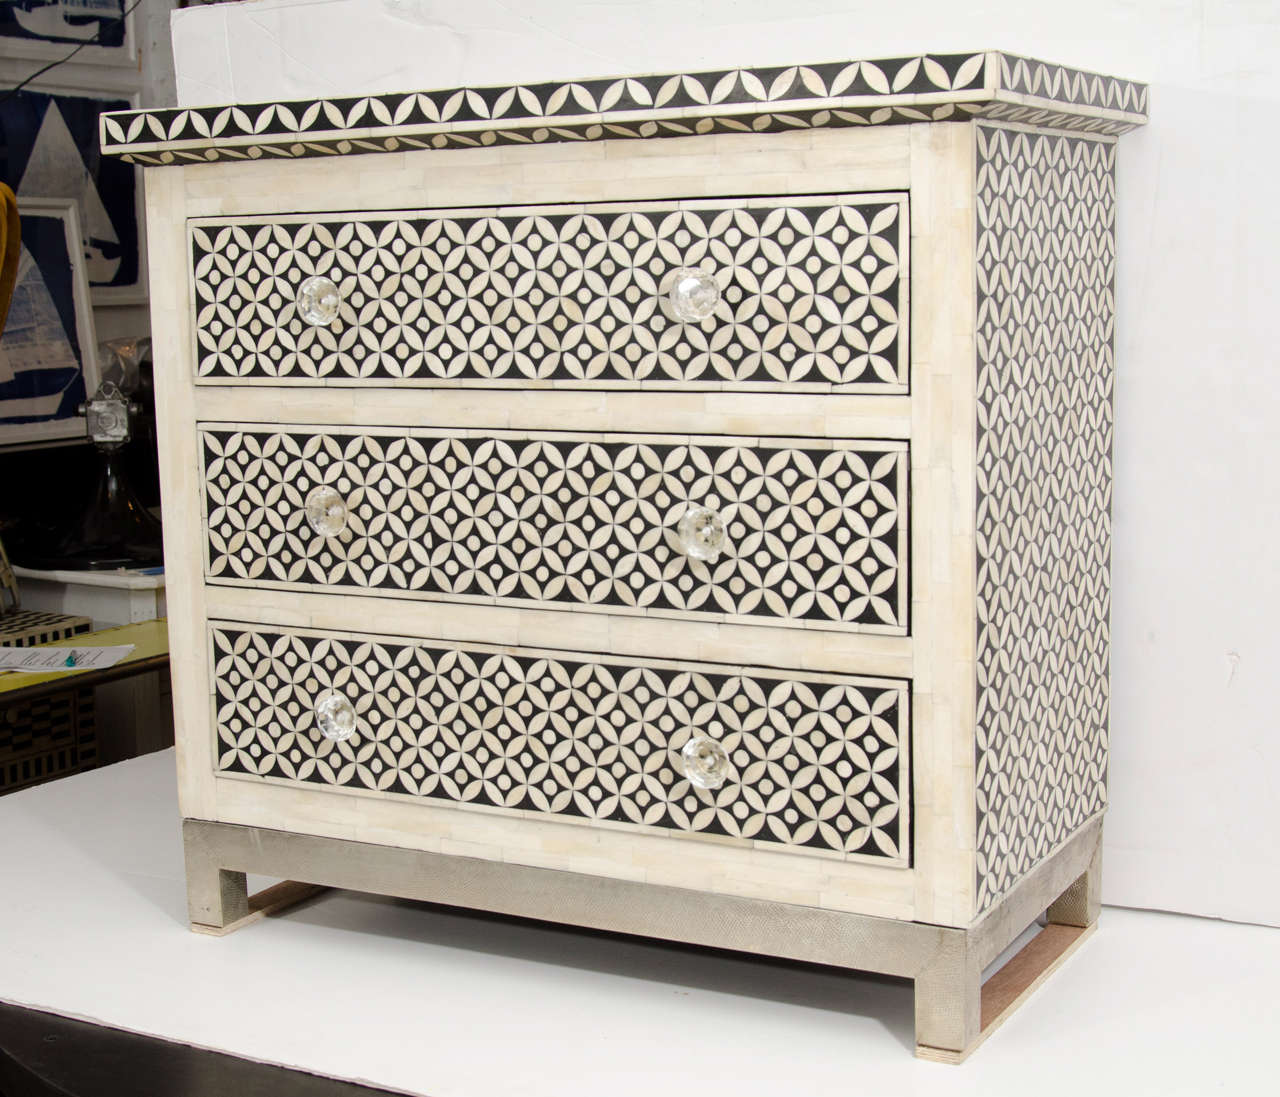 21st Century black and white geometric pattern.
White bone trim, 3 drawers, and square metal stand.